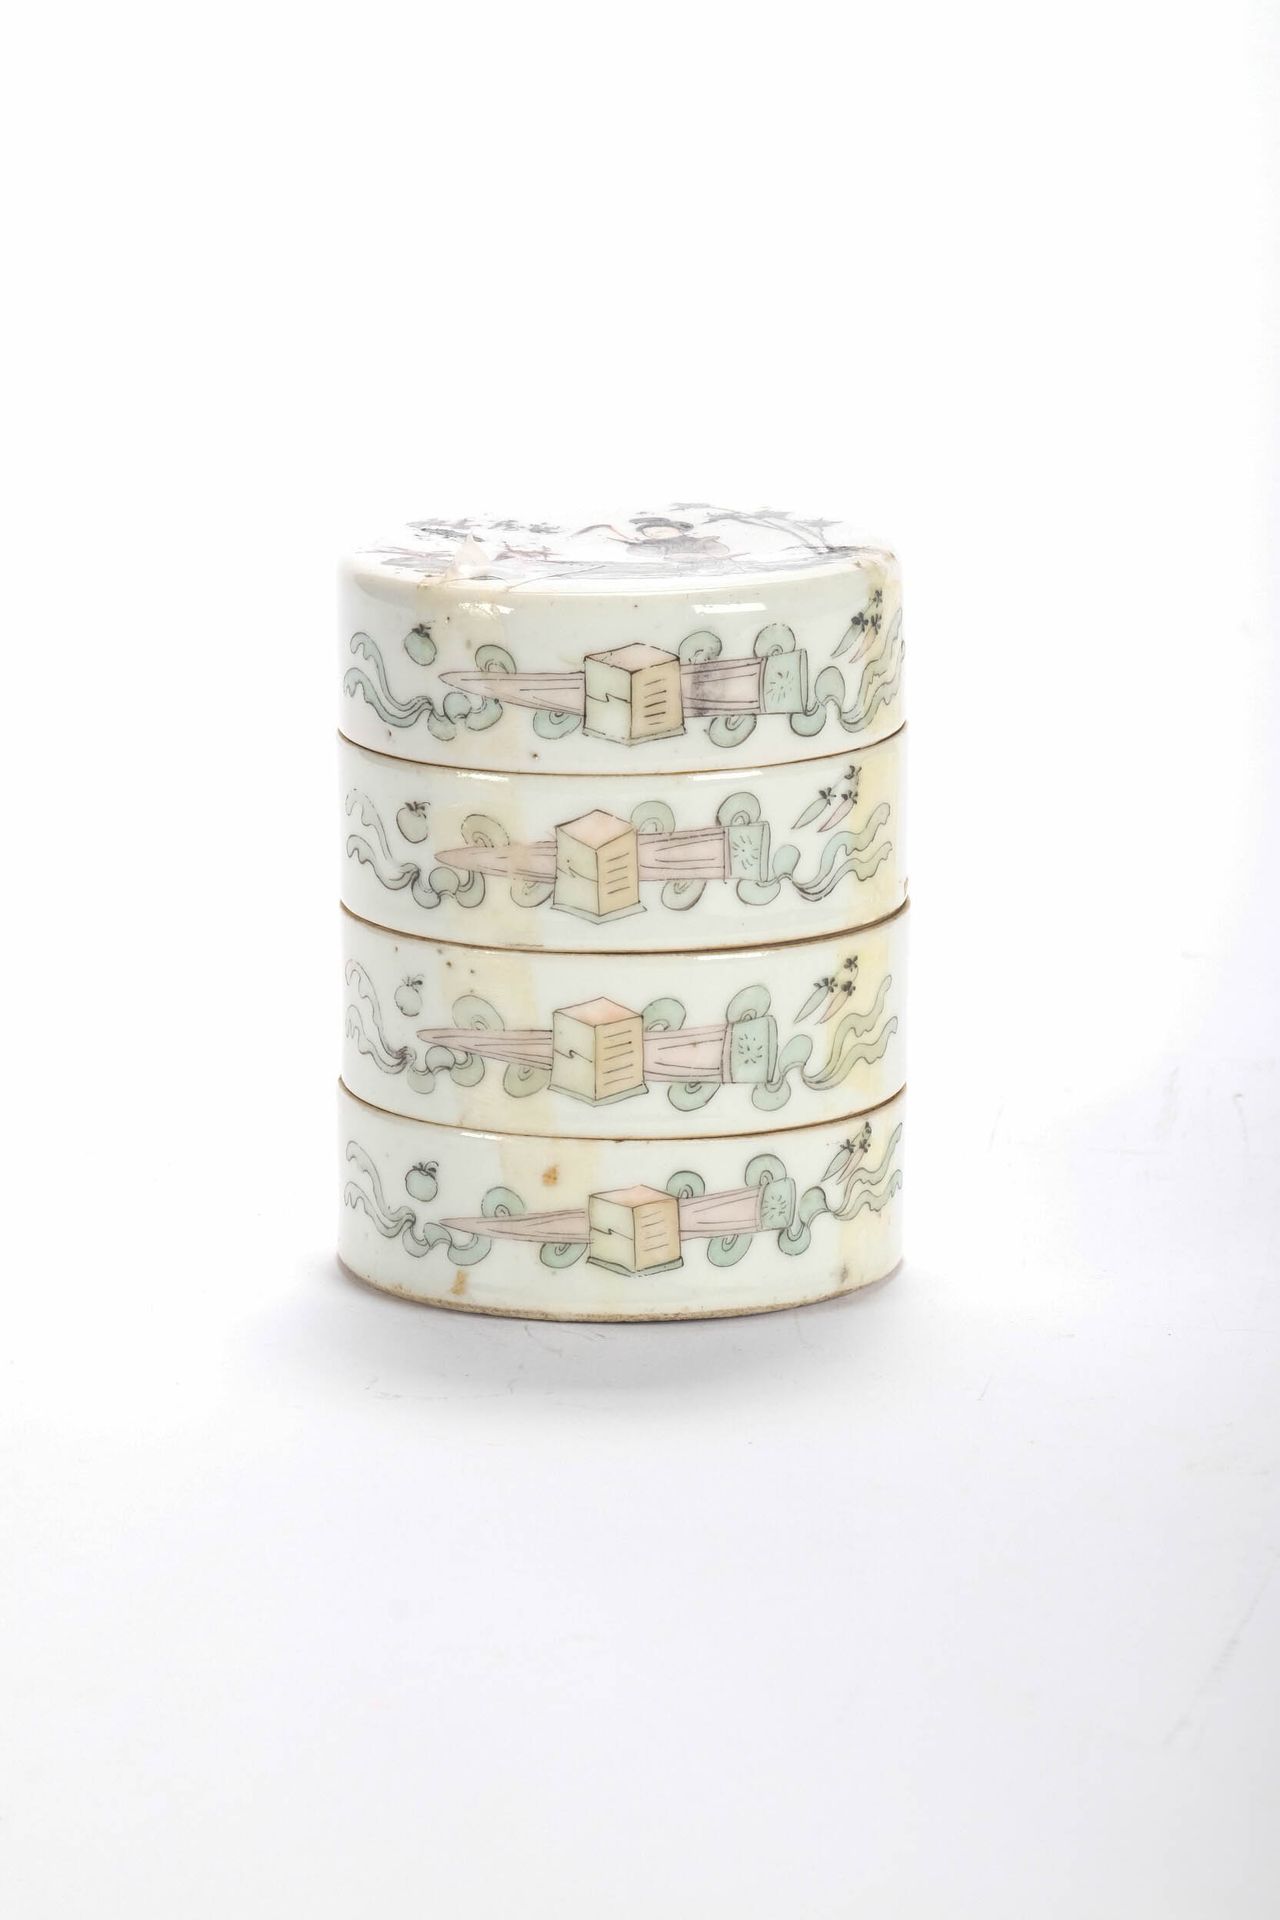 CHINE (CHINA, 中国) Porcelain pot with 4 compartments. H 11 cm D 8 cm. XIX